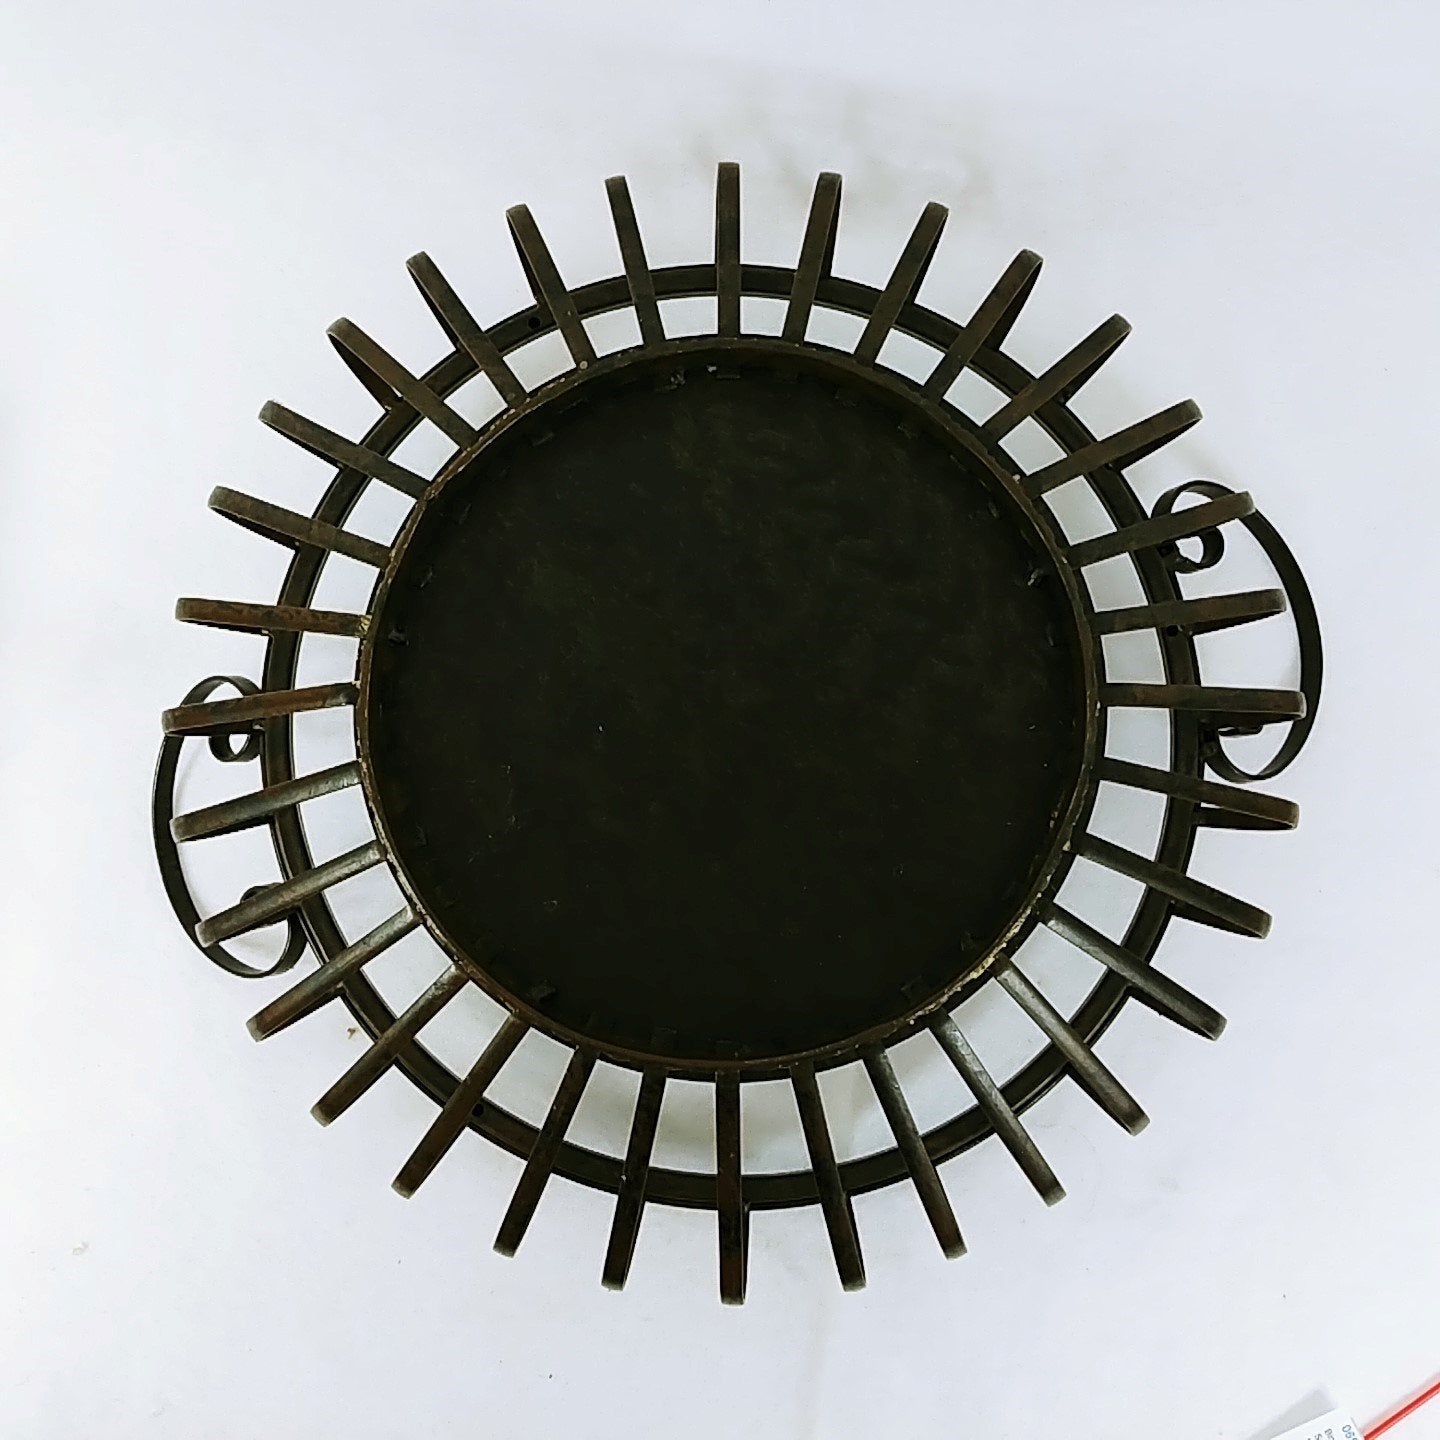 Decorative Metal Basket Curved Design Table Centerpiece Home Decor Accent